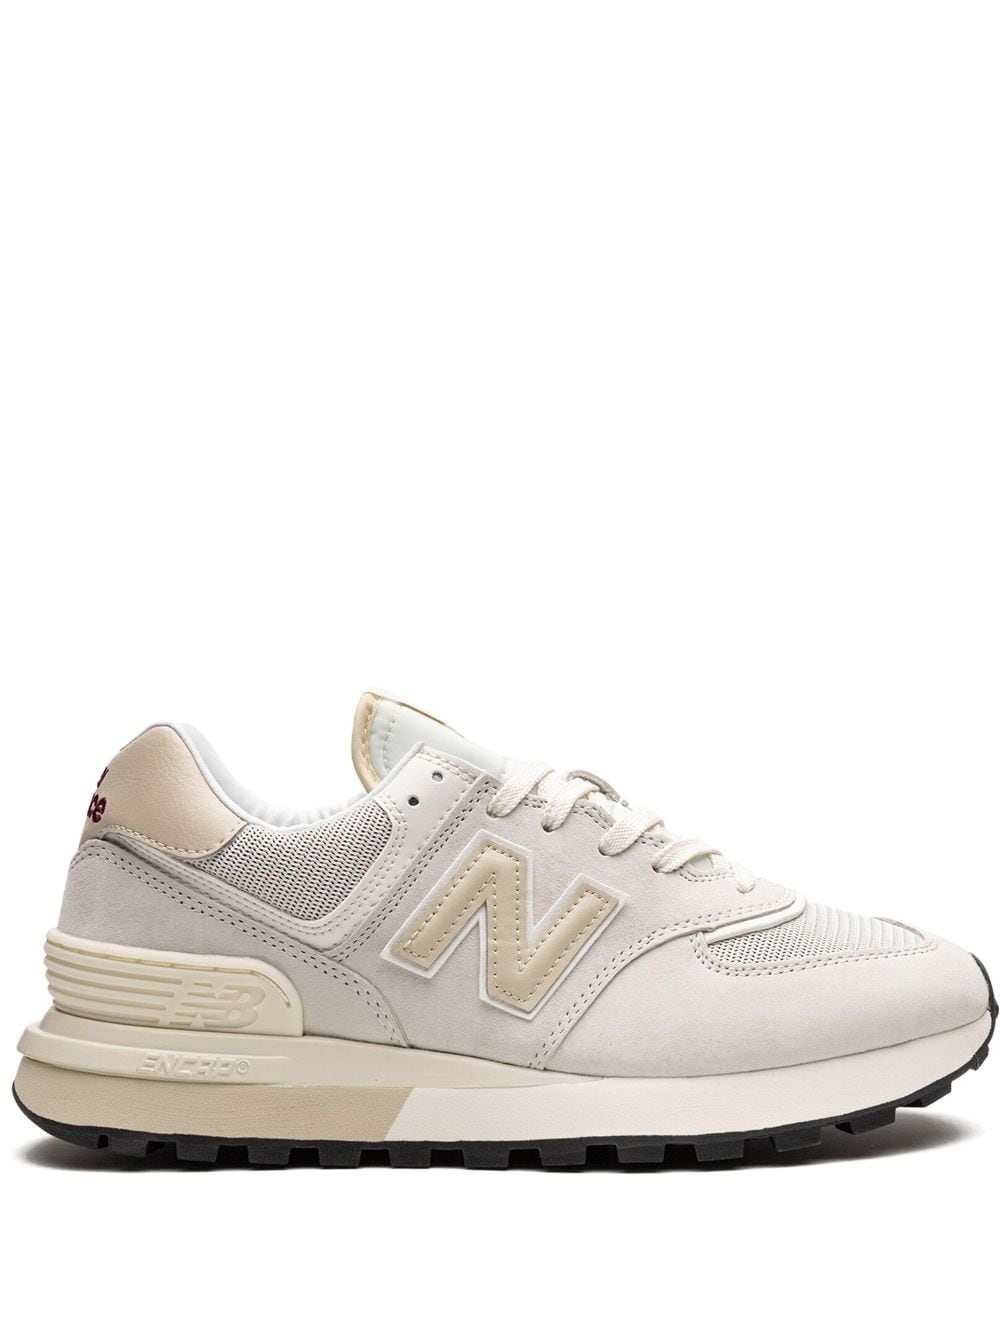 New Balance 574 "Gray/White" sneakers - Grey